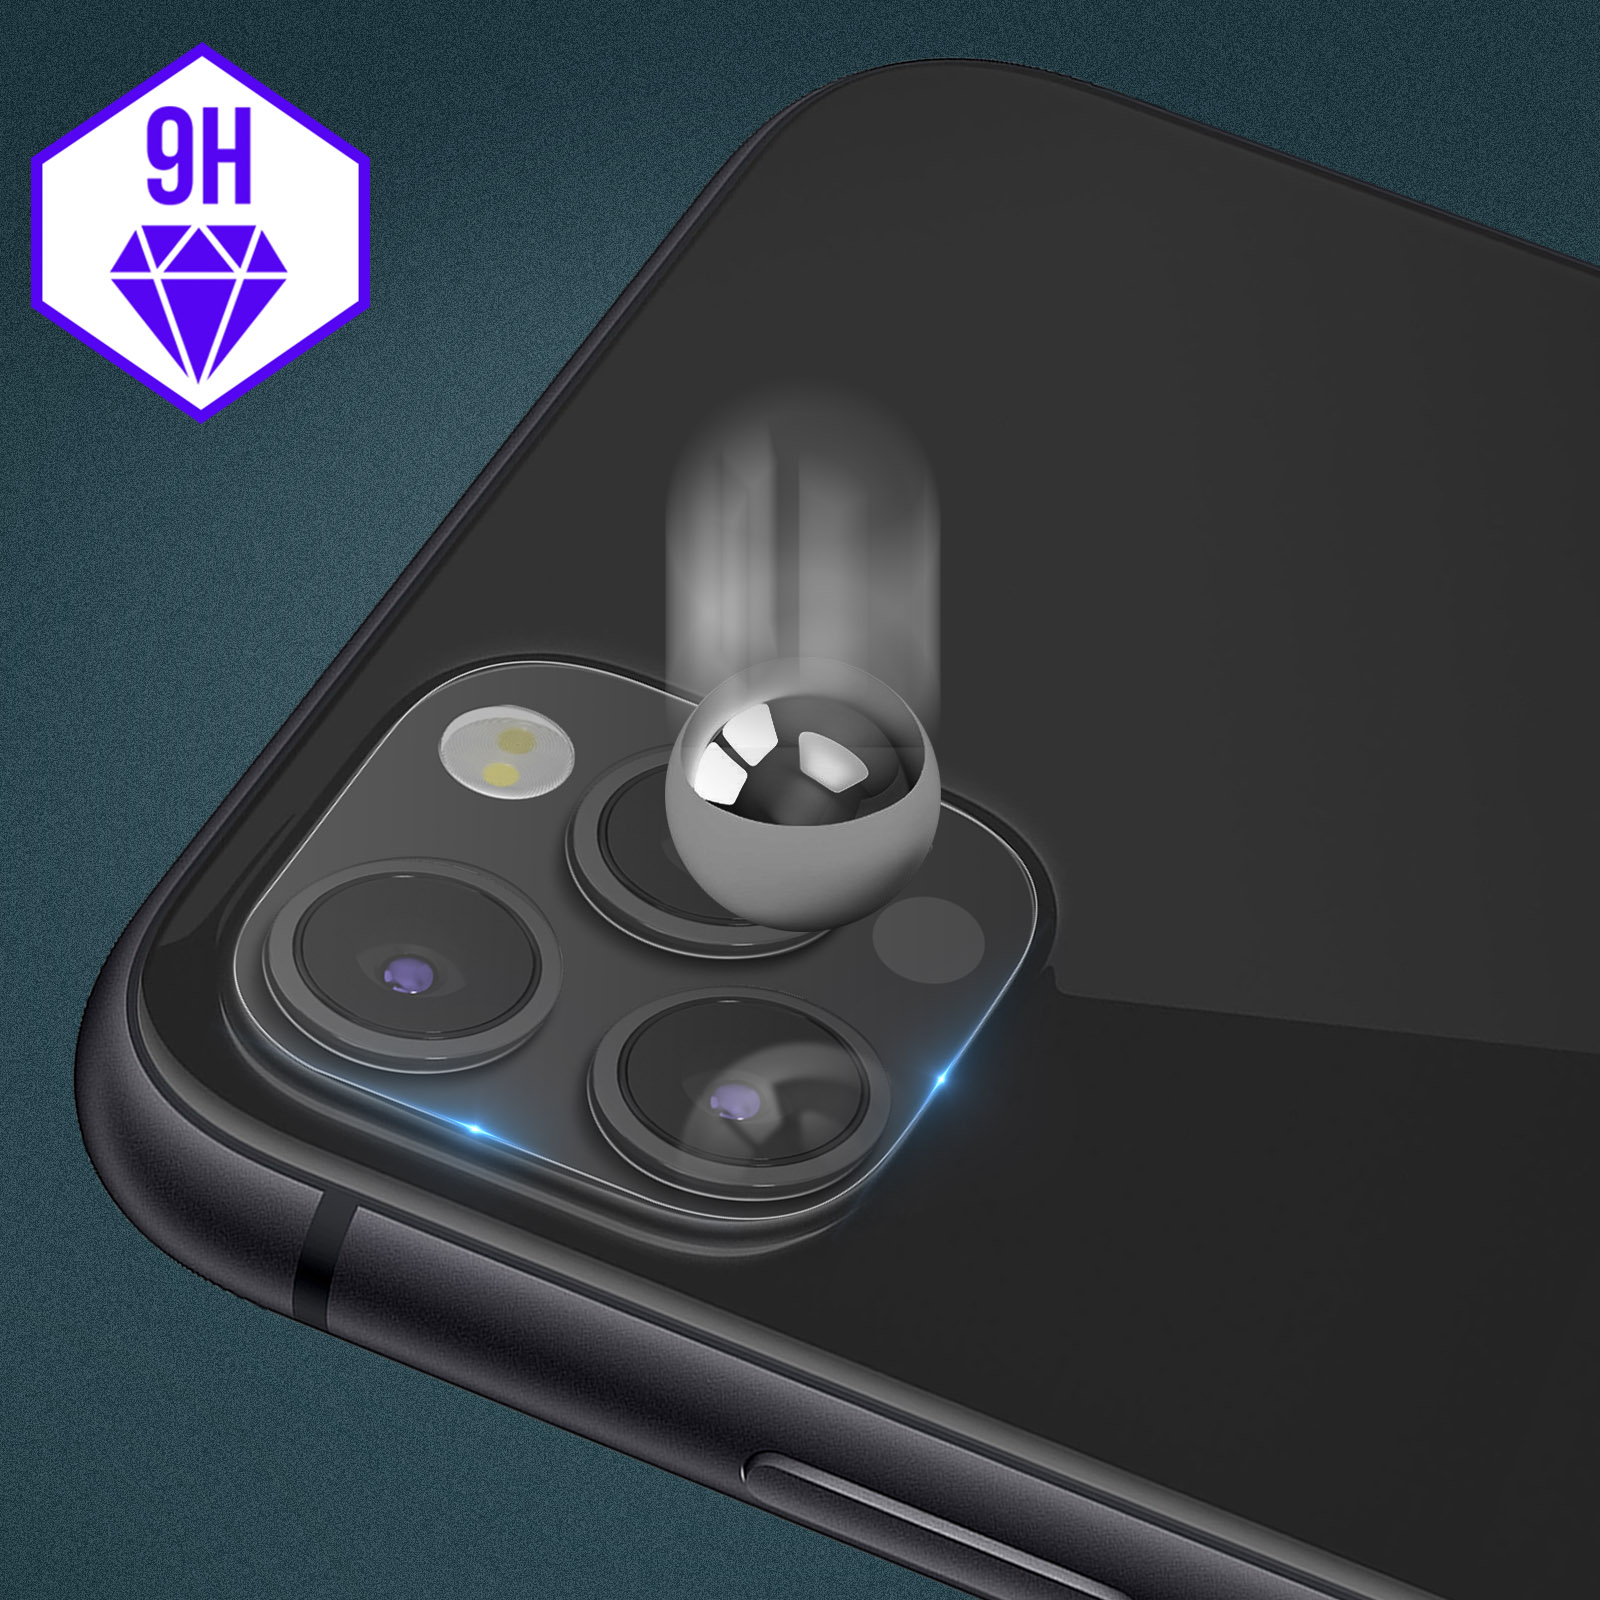 Cristal Protector cámara trasera iPhone 12 Pro Max